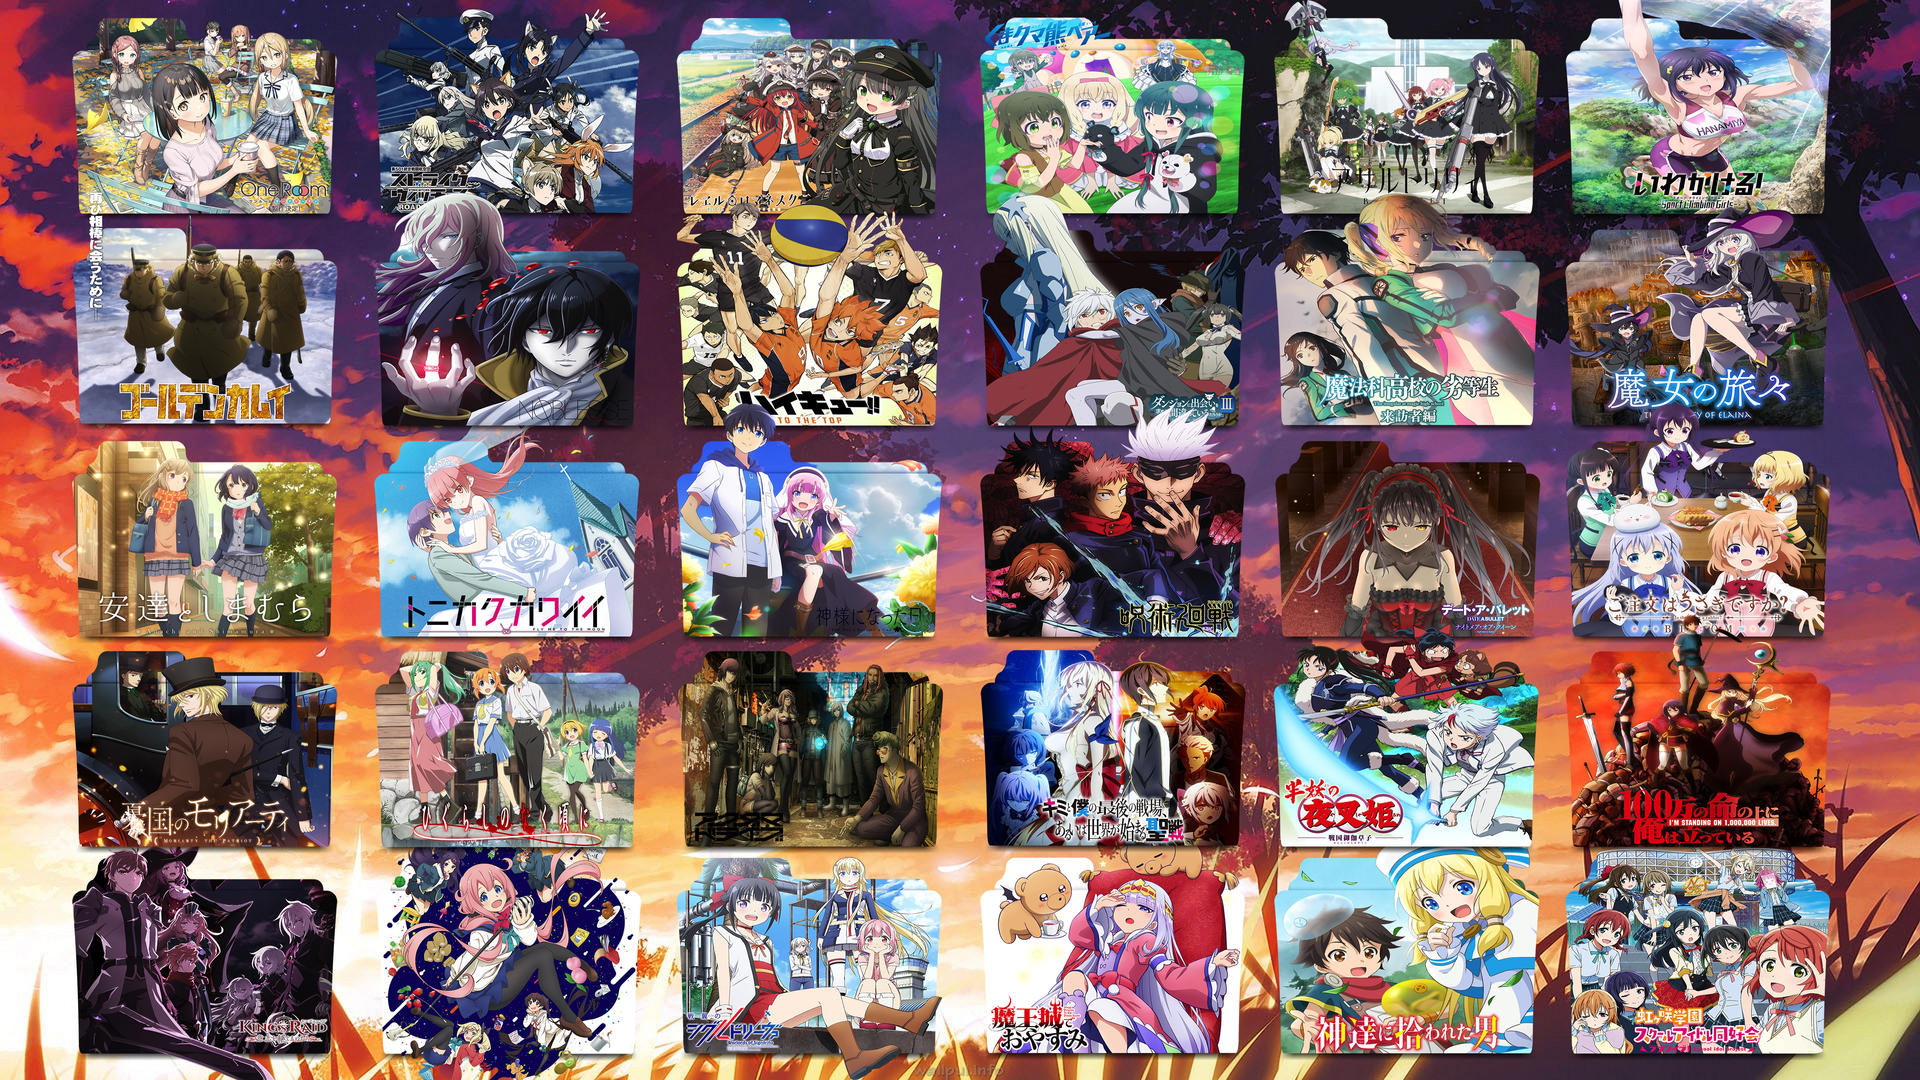 Shingeki no Kyojin: The Final Season Folder Icon by Kikydream on